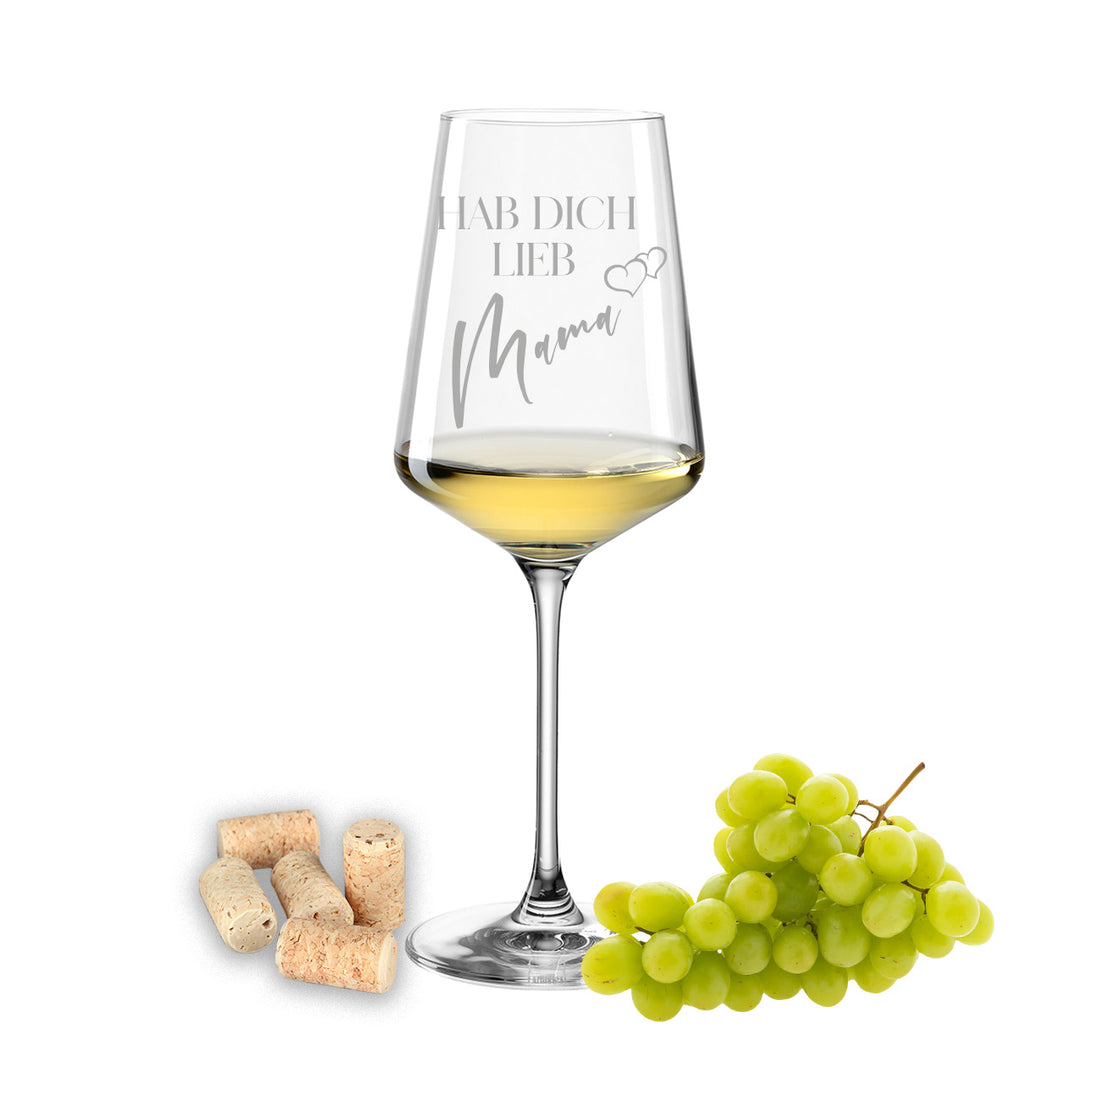 Weinglas mit Gravur Leonardo Puccini "HAB DICH LIEB MAMA"